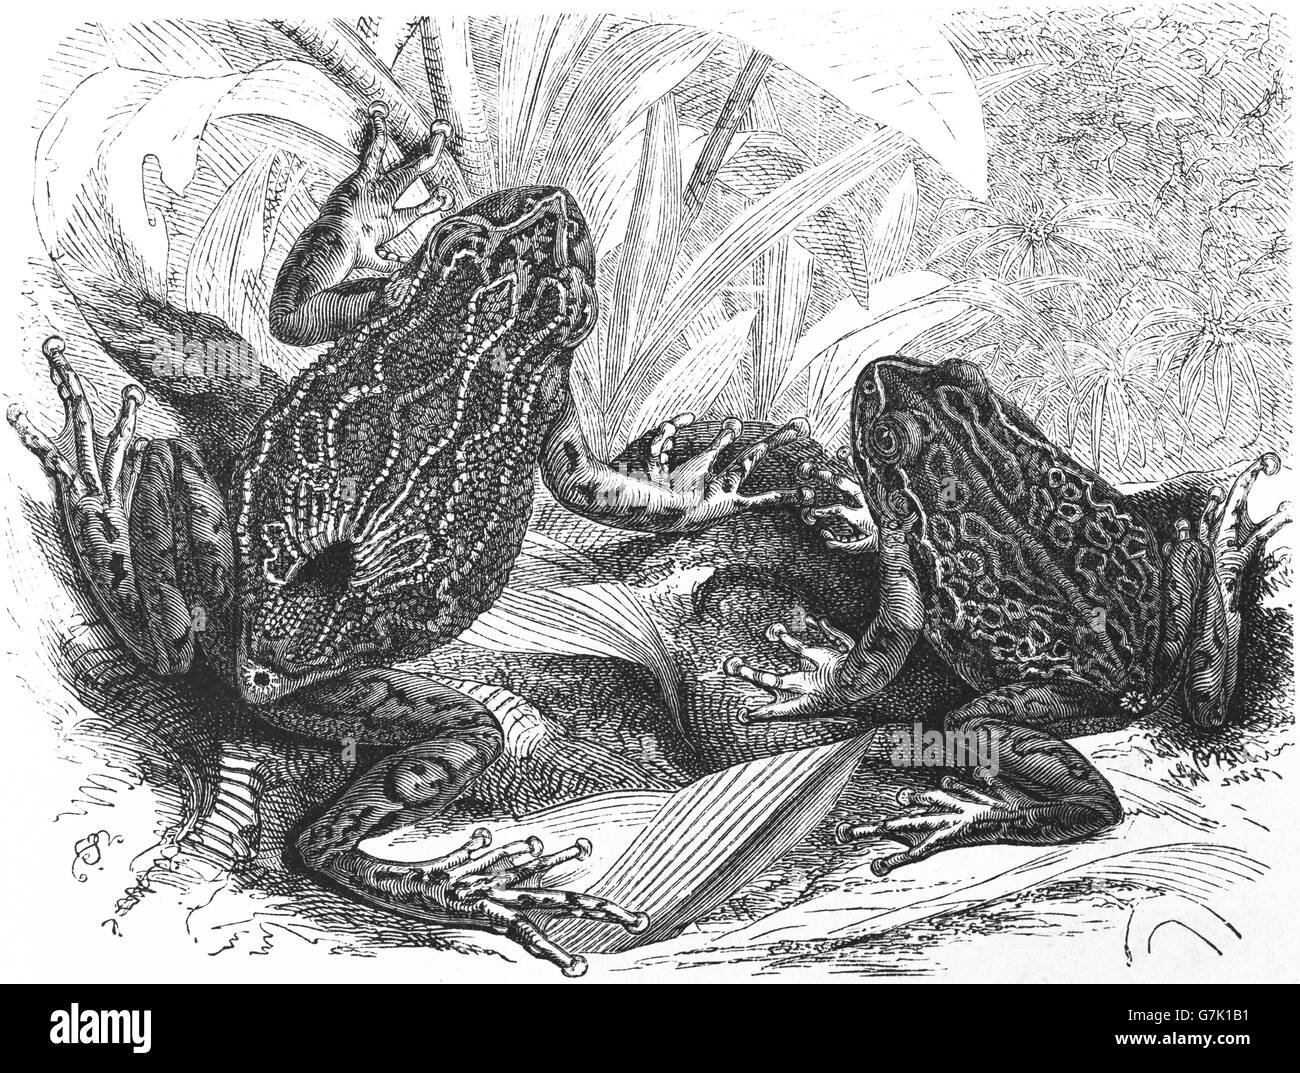 Common marsupial frog, Gastrotheca marsupiata, Hemiphractidae, illustration from book dated 1904 Stock Photo